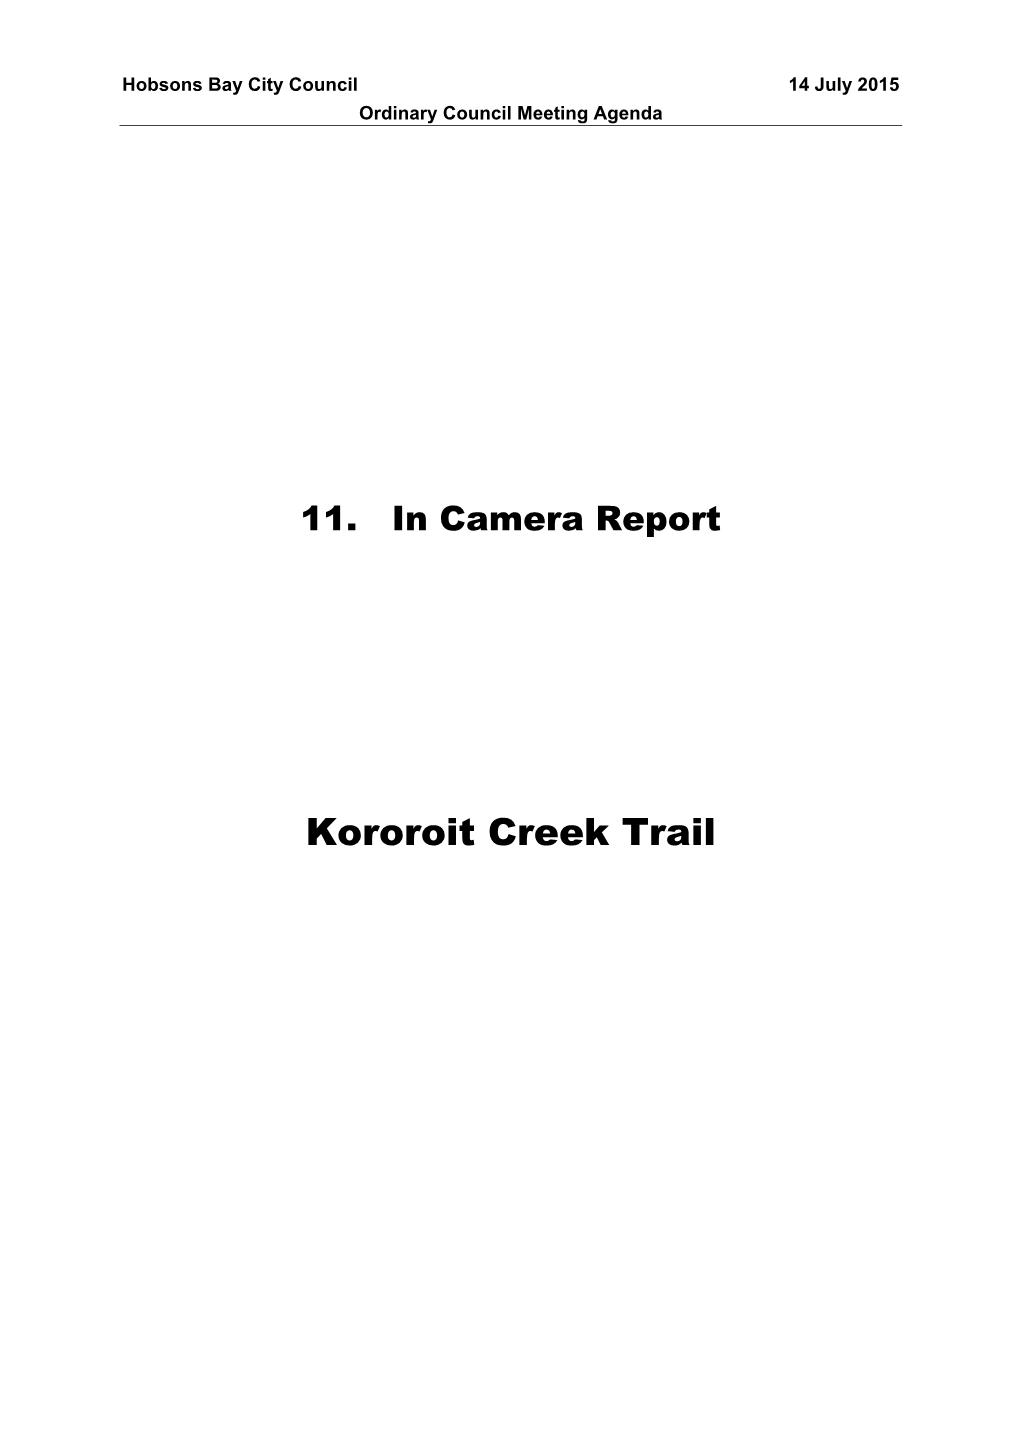 Kororoit Creek Trail